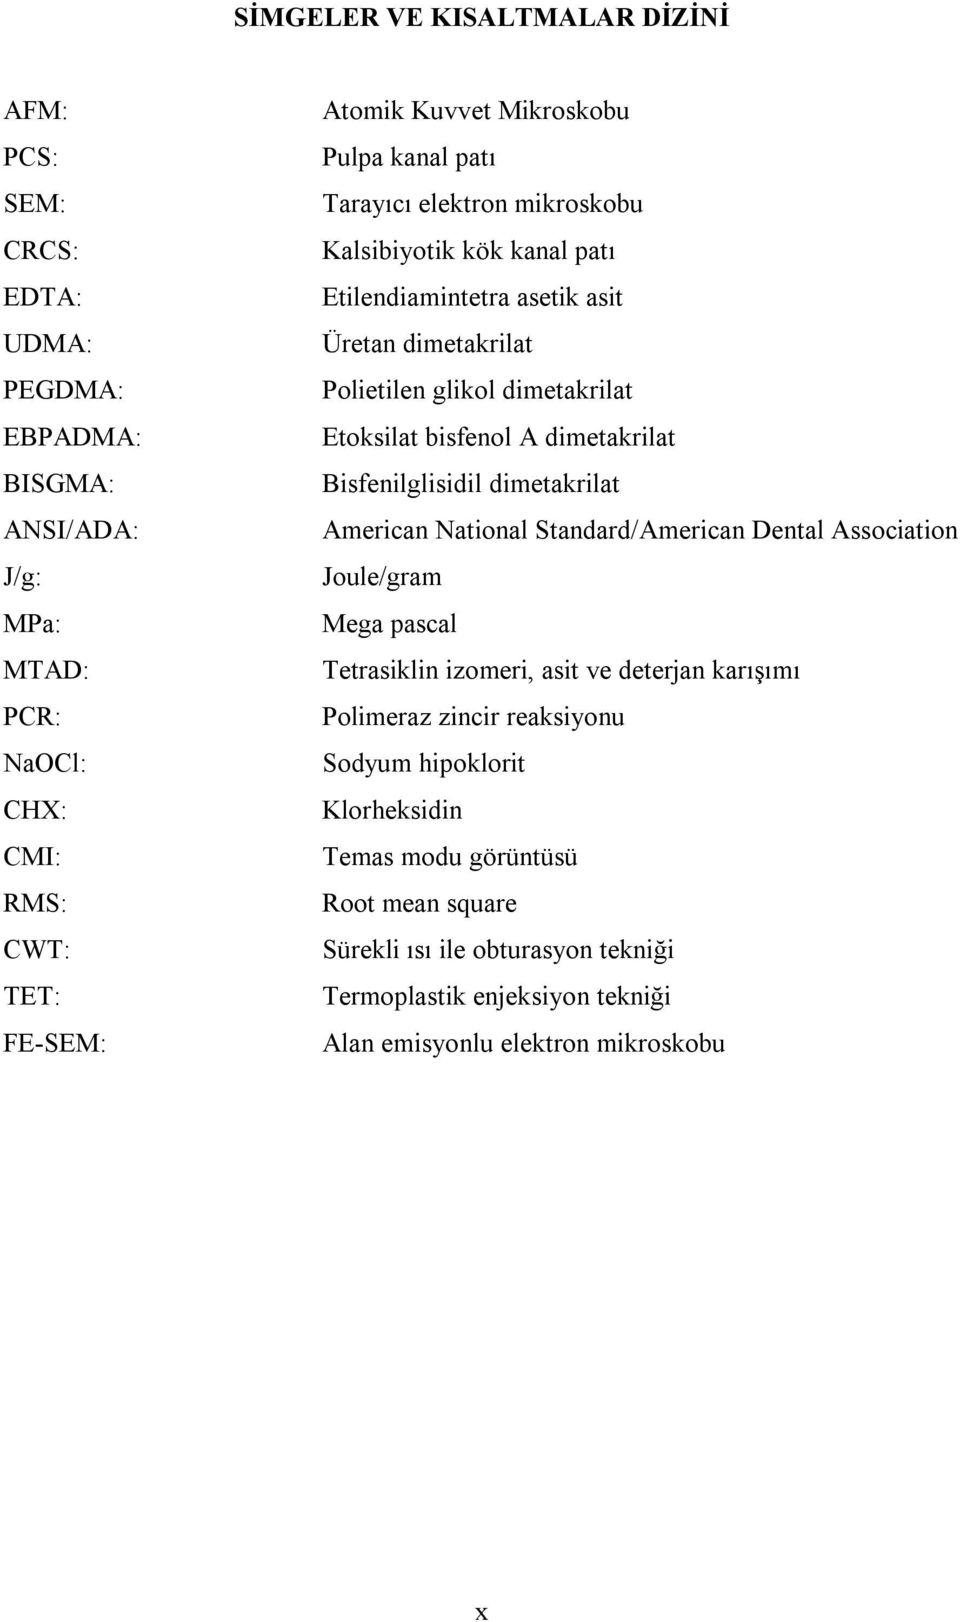 bisfenol A dimetakrilat Bisfenilglisidil dimetakrilat American National Standard/American Dental Association Joule/gram Mega pascal Tetrasiklin izomeri, asit ve deterjan karışımı